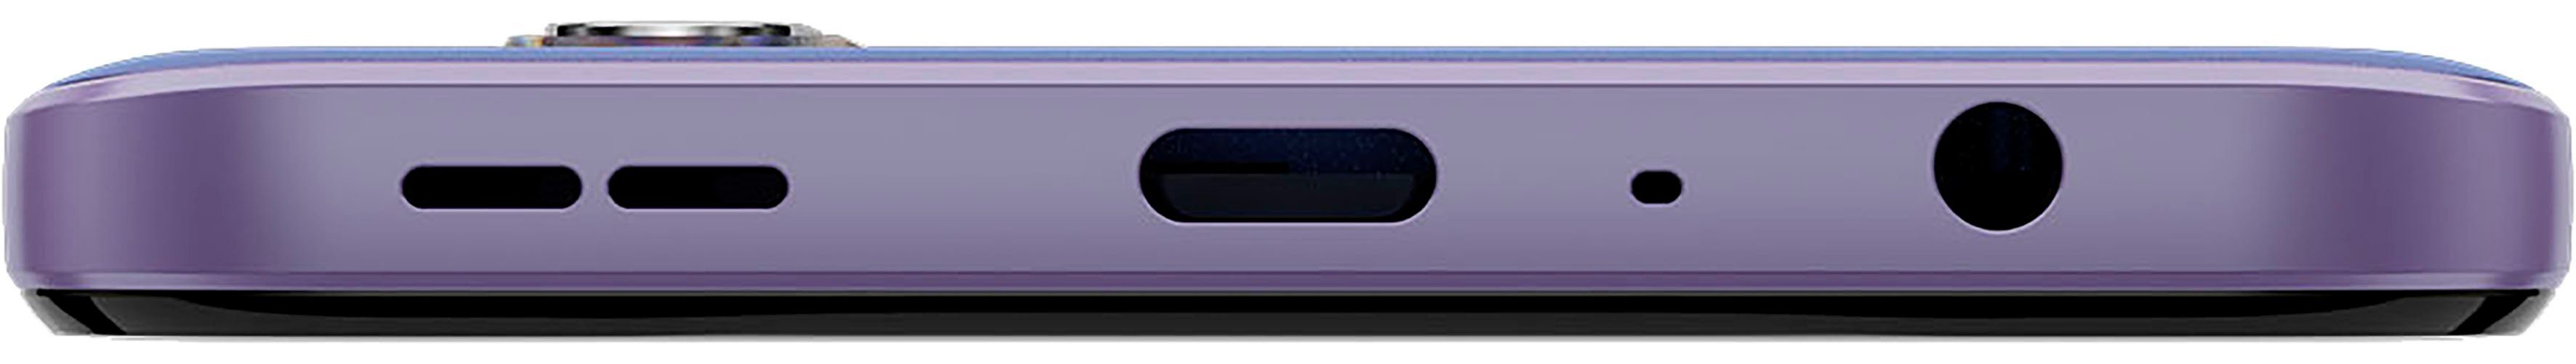 128 MP Smartphone (16,9 G42 Kamera) purple cm/6,65 Zoll, 50 Nokia Speicherplatz, GB